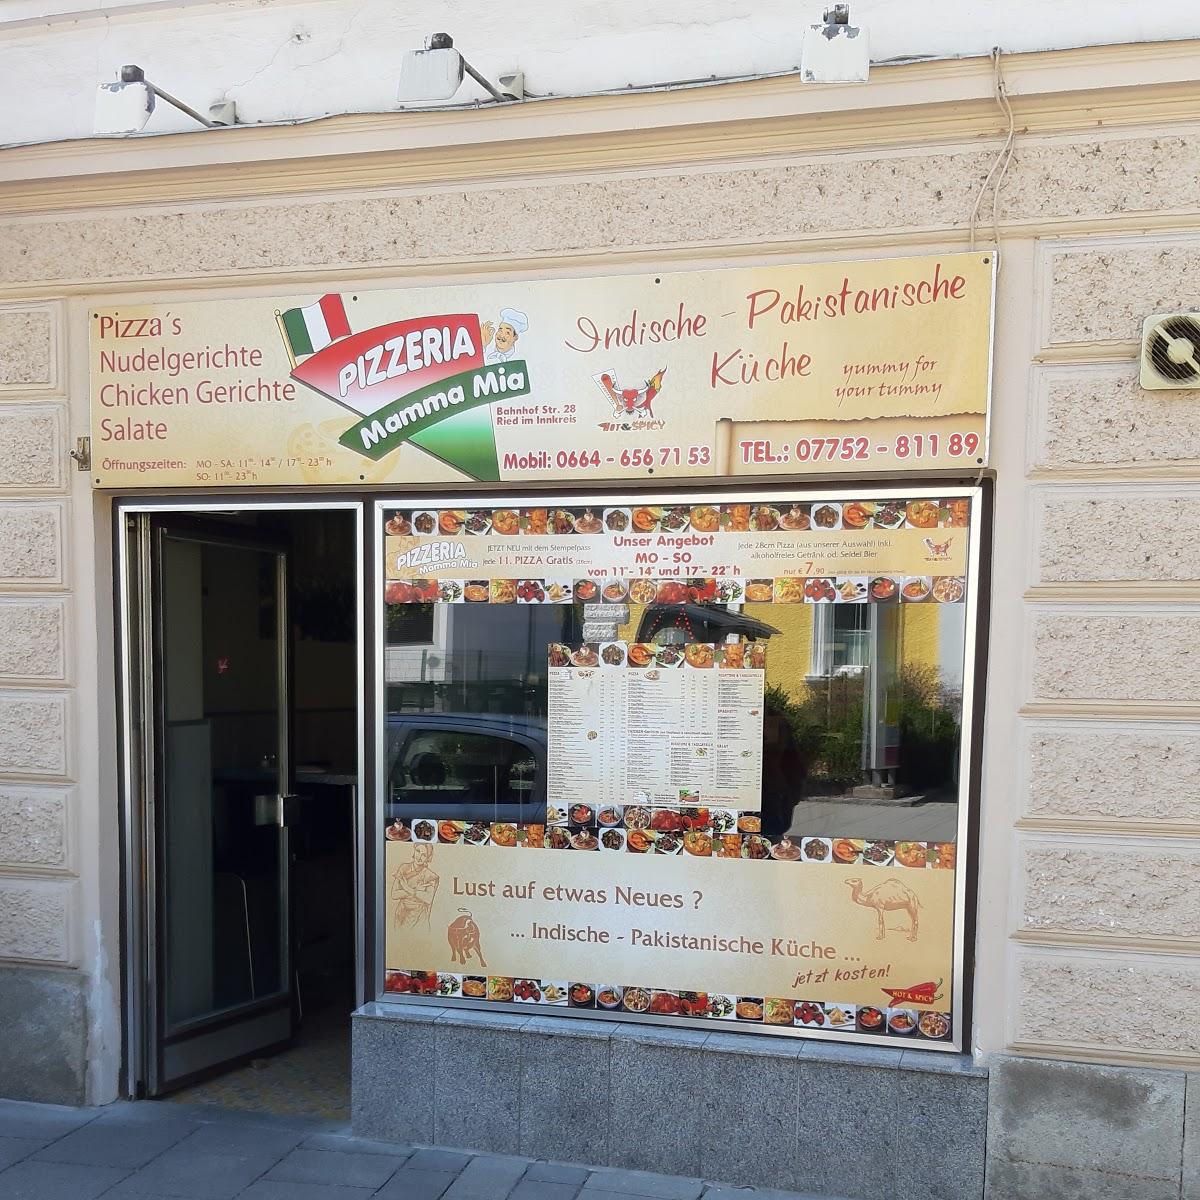 Restaurant "Pizzaria Mamma Mia" in Ried im Innkreis